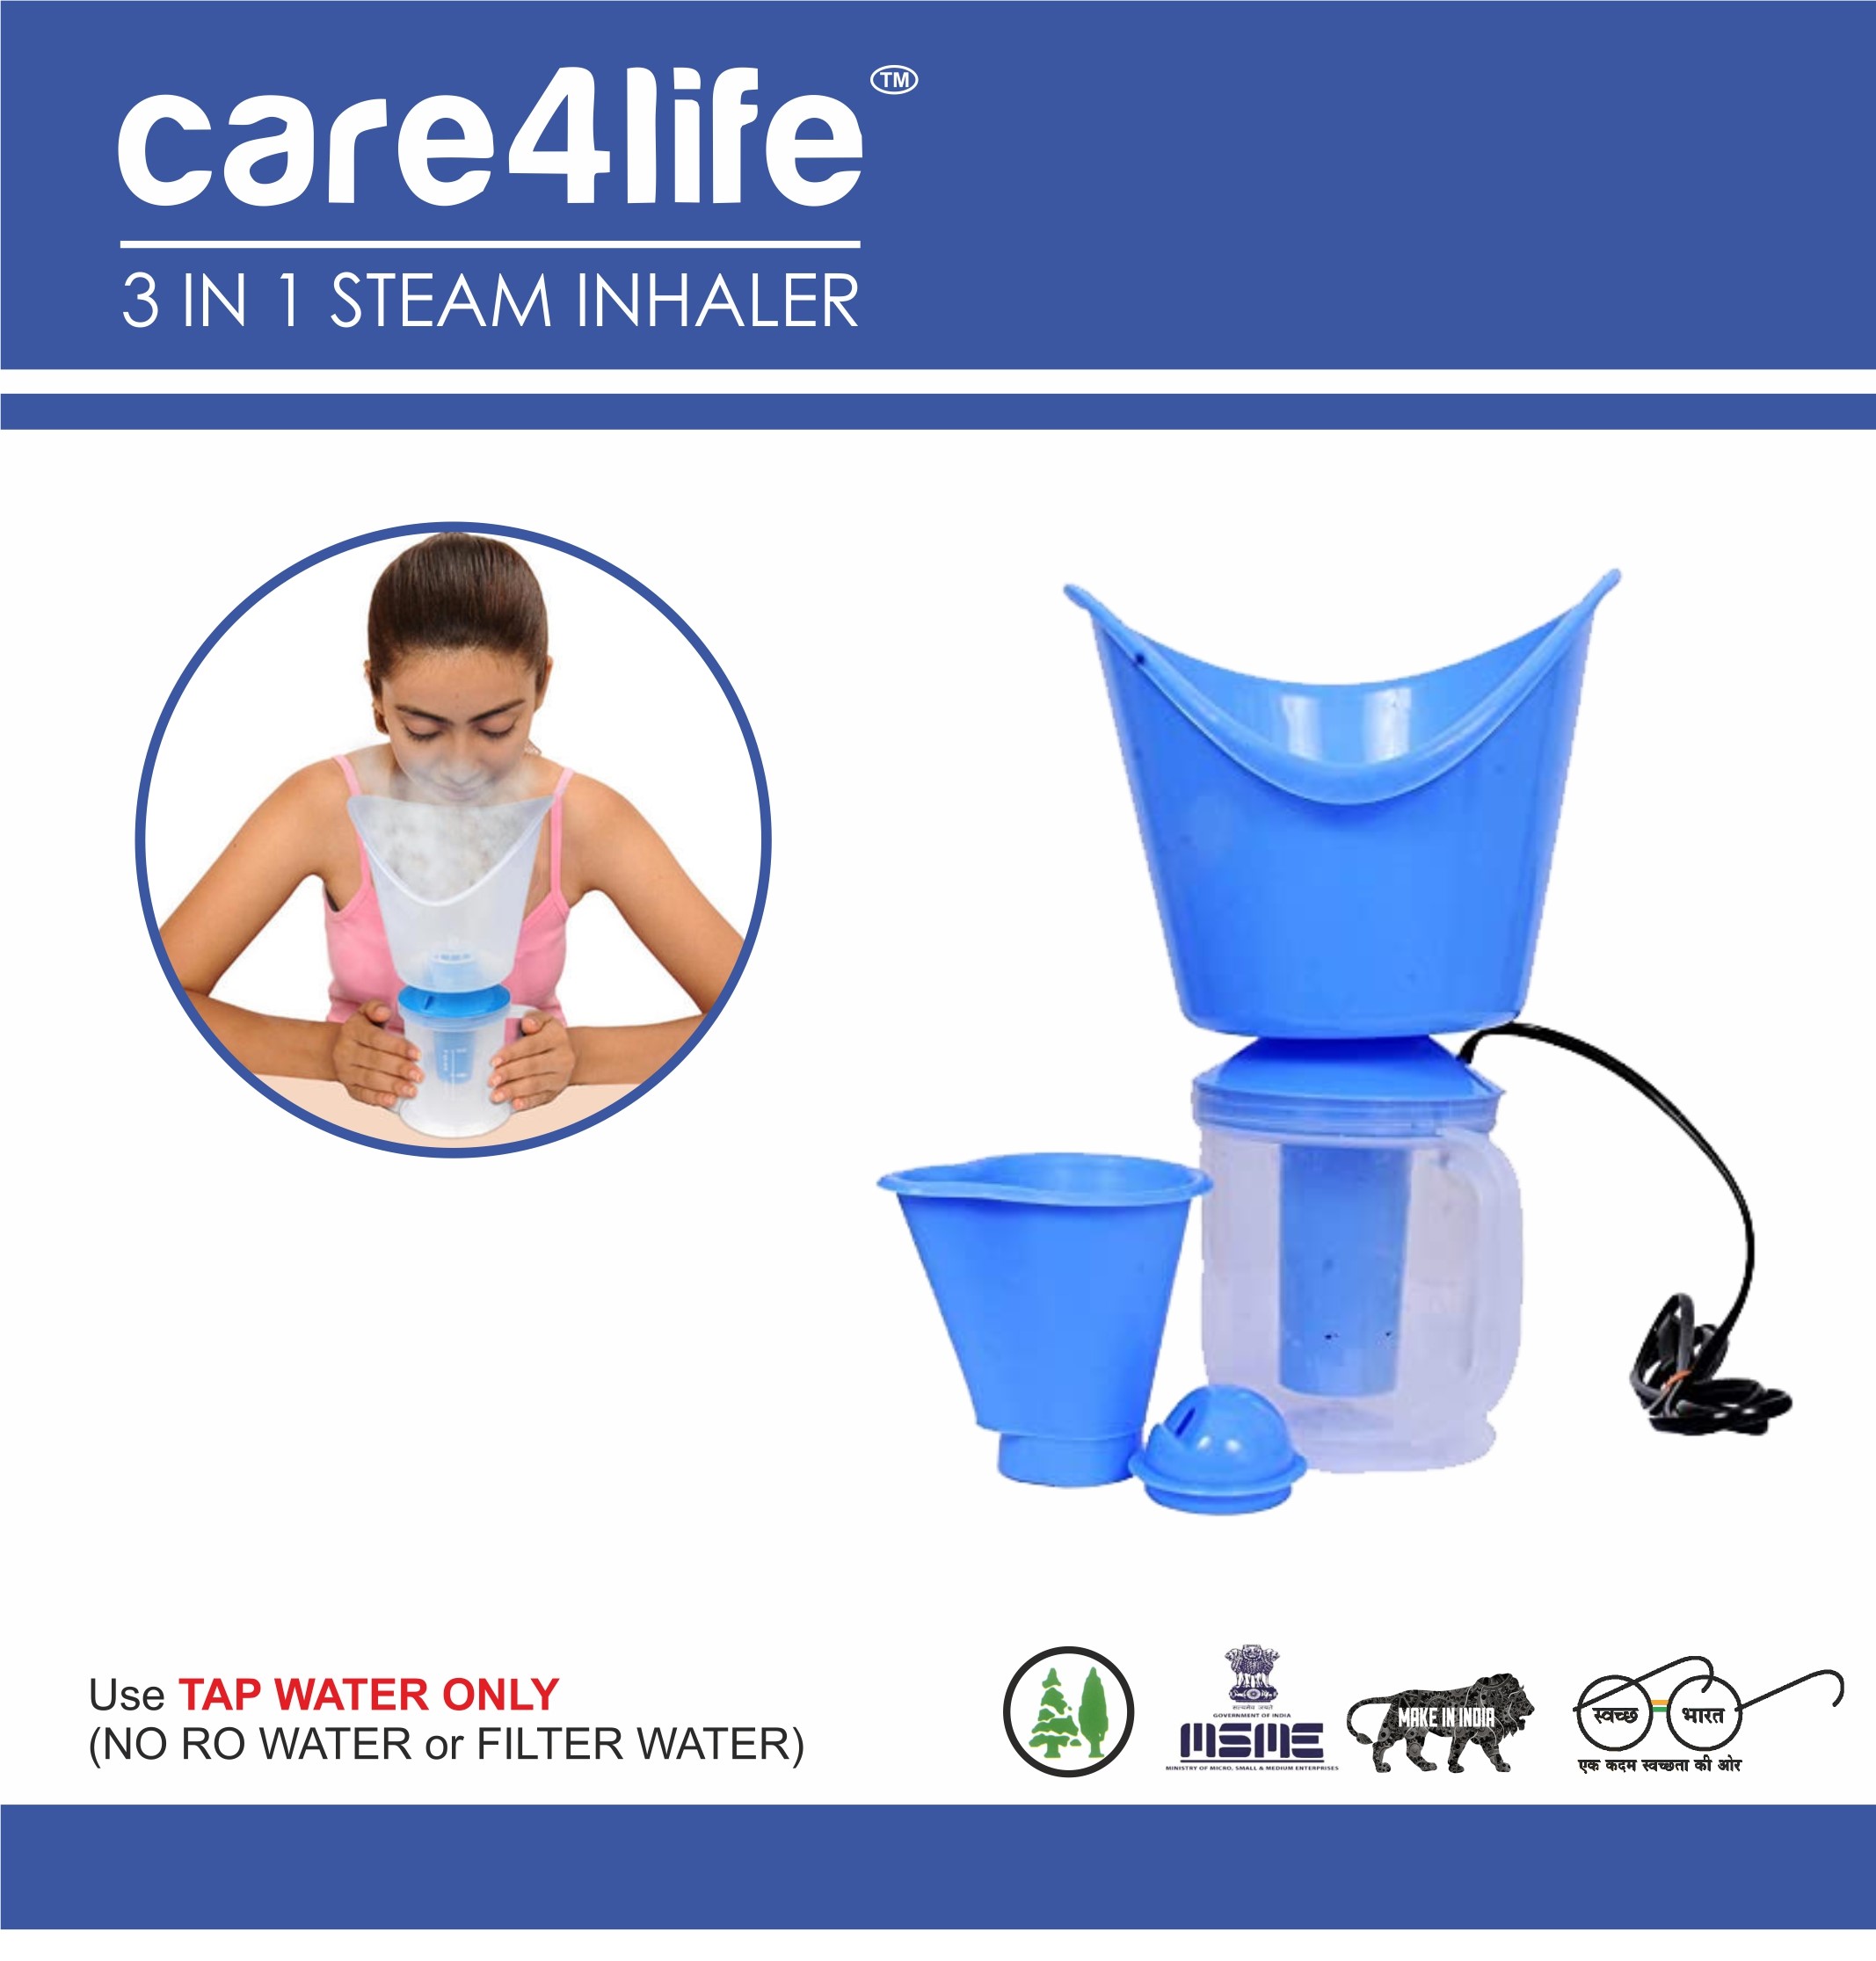 Care4life Steam Inhaler